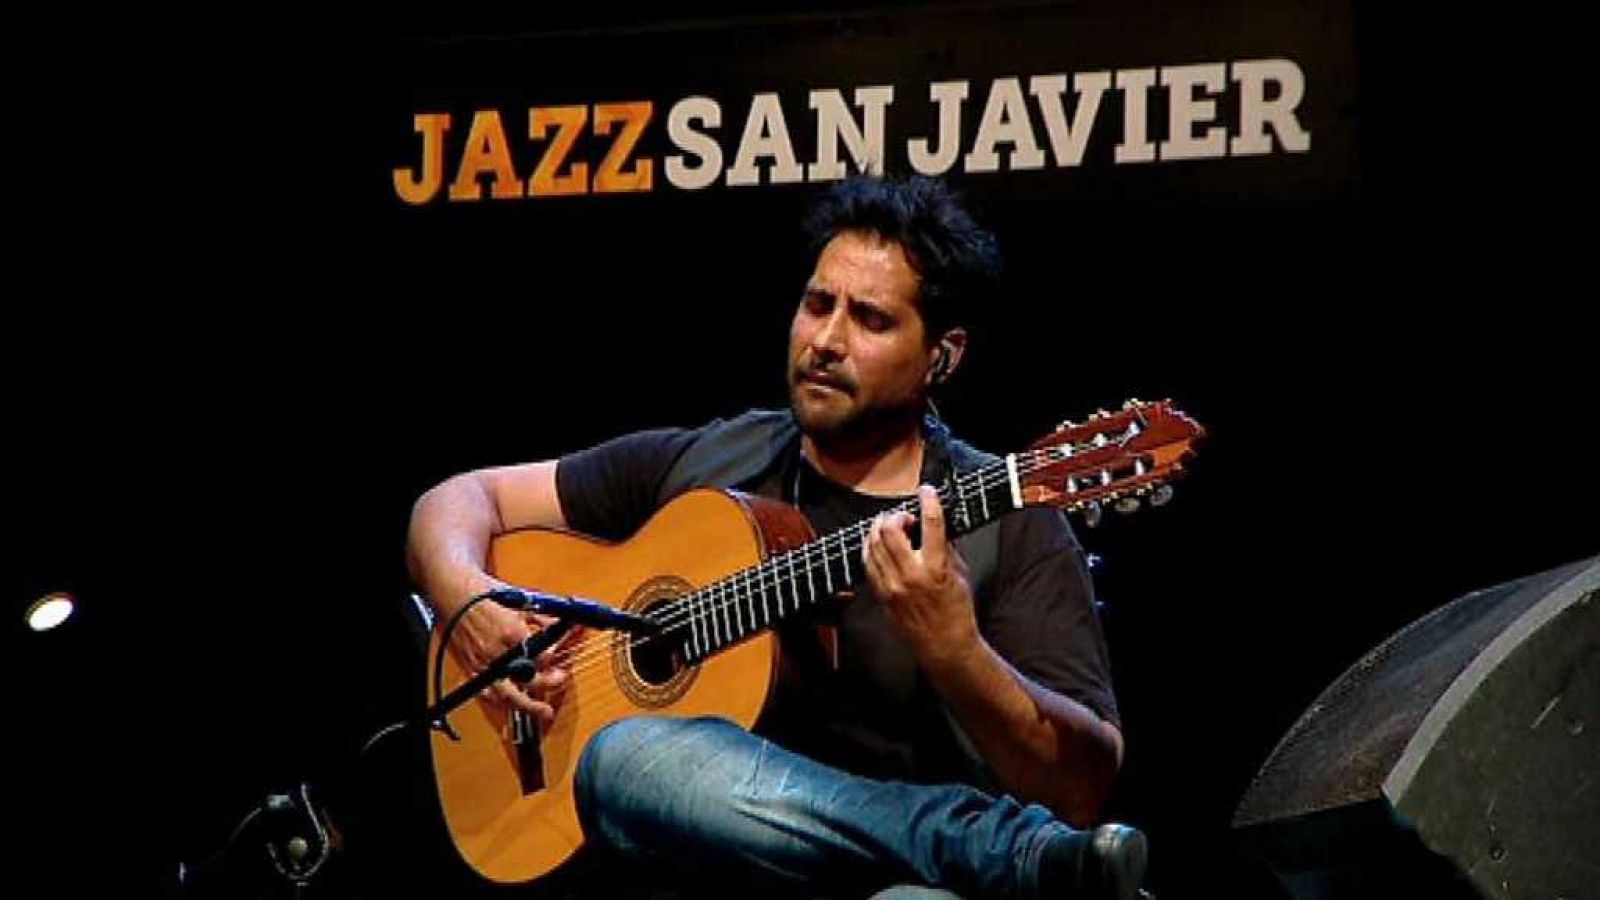 Festivales de verano - Festival de Jazz de San Javier: Jorge Pardo